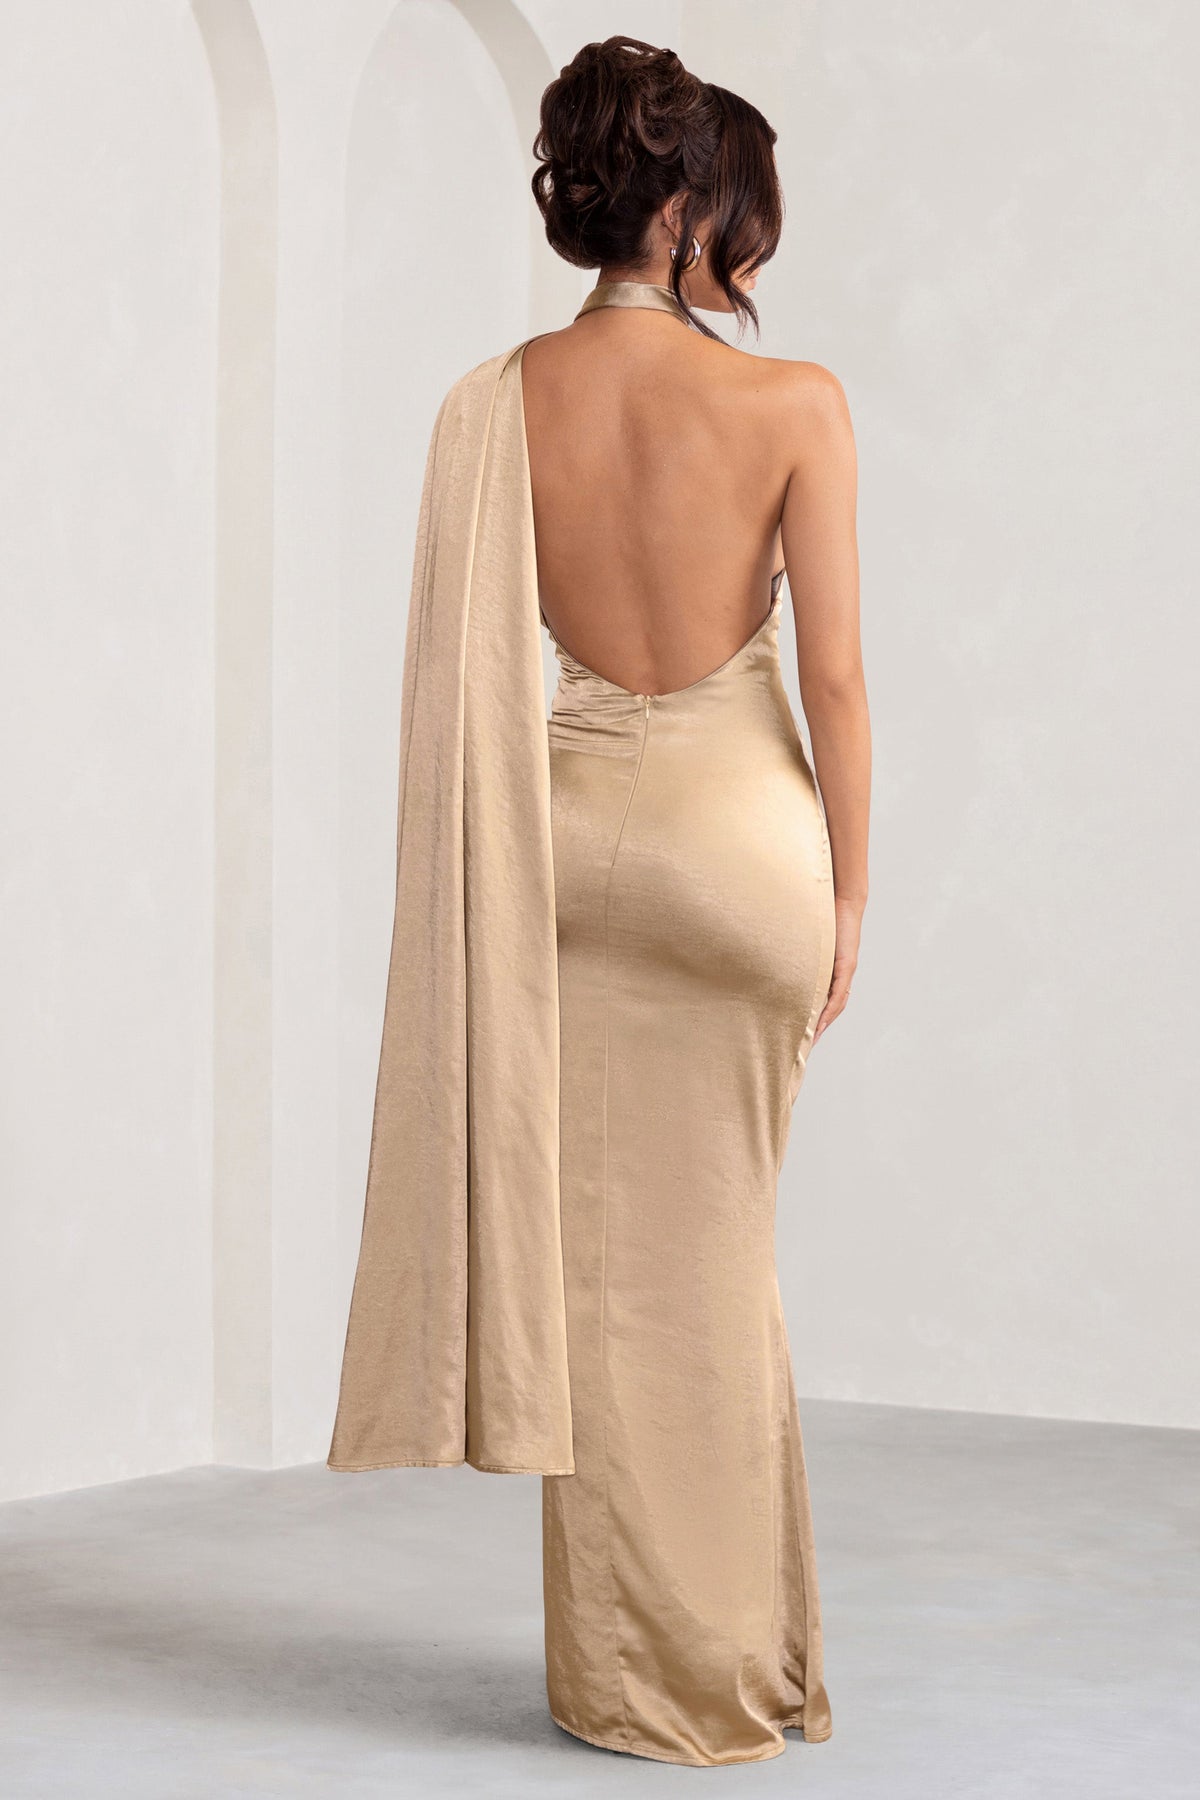 One Shoulder Satin Ruched Prom Dress Backless With Split Formal Dress –  Modernicities.com